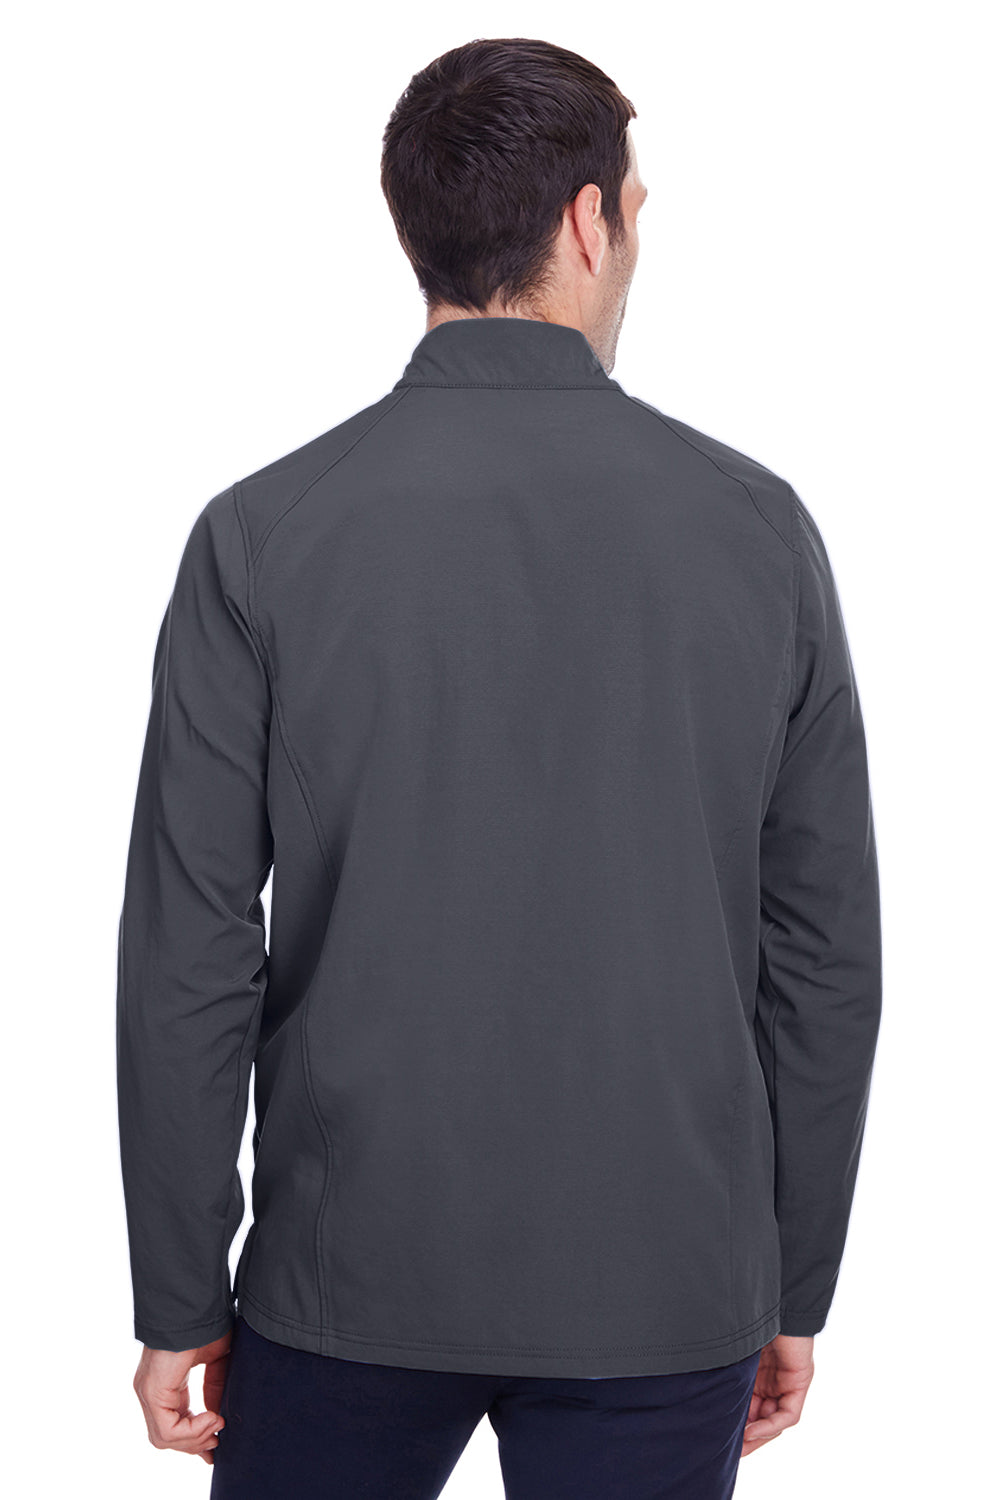 North End NE401 Mens Quest Performance Moisture Wicking 1/4 Zip Sweatshirt Carbon Grey/Black Back